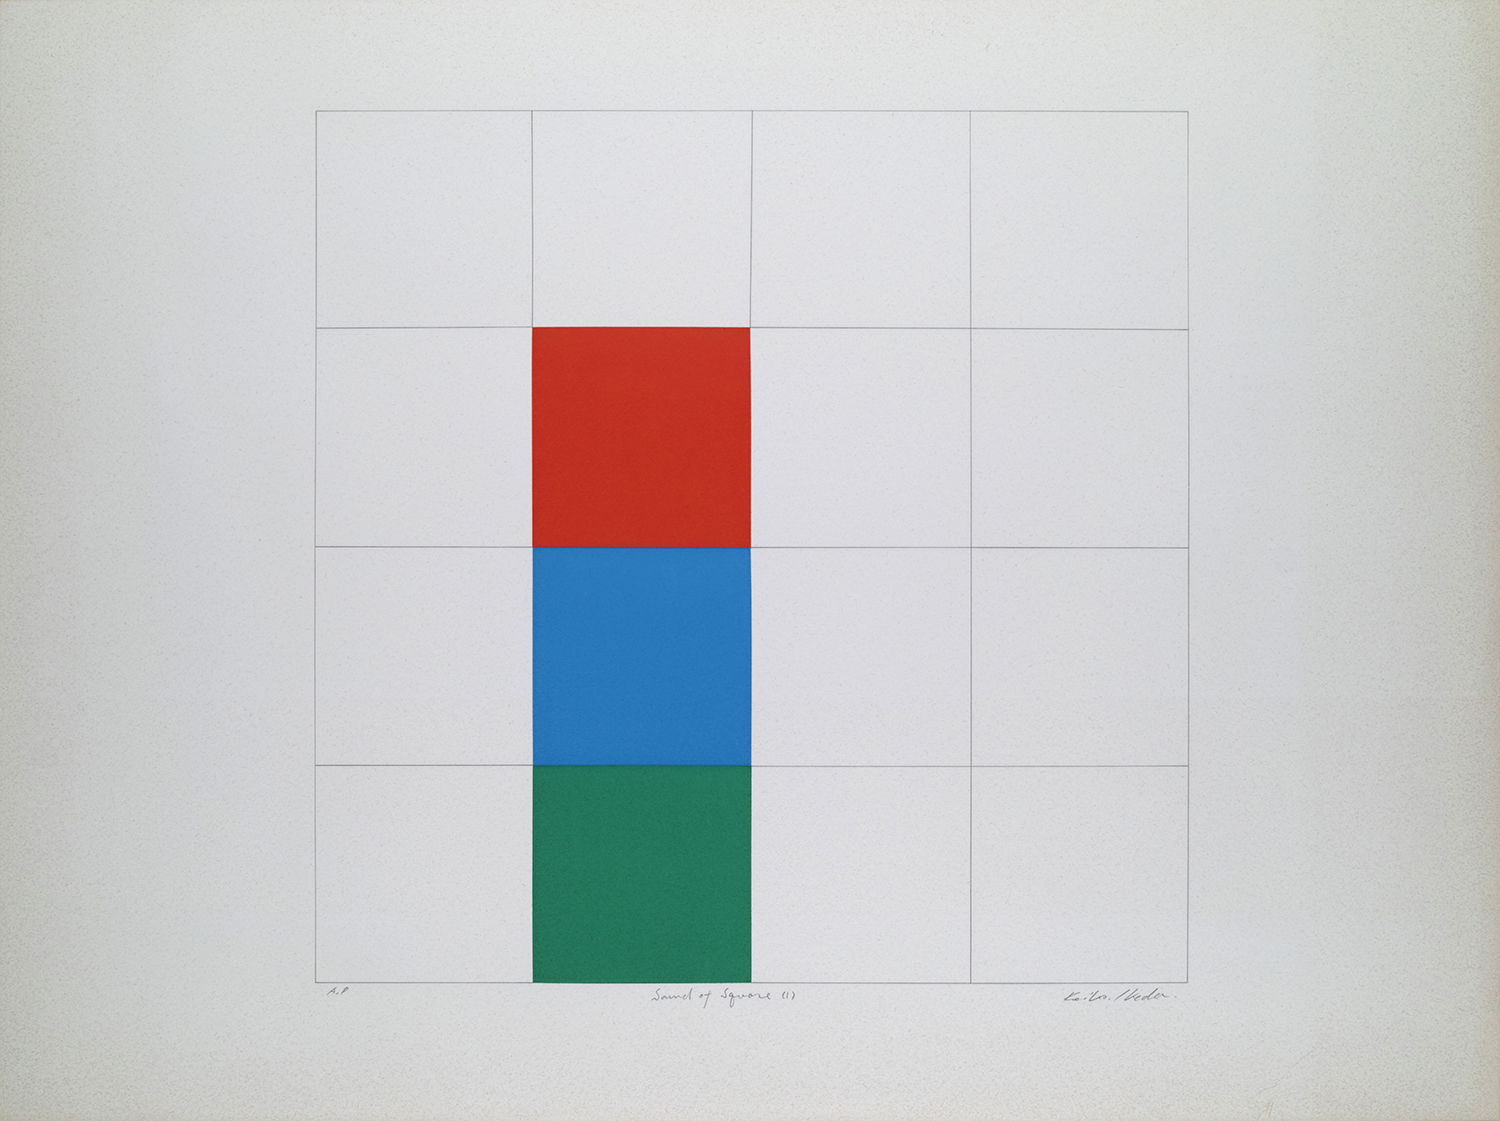 Sound of Square (1) Nazdar color silkscreen, pencil on BFK paper, 545 x 728 mm, 1982 ed:5